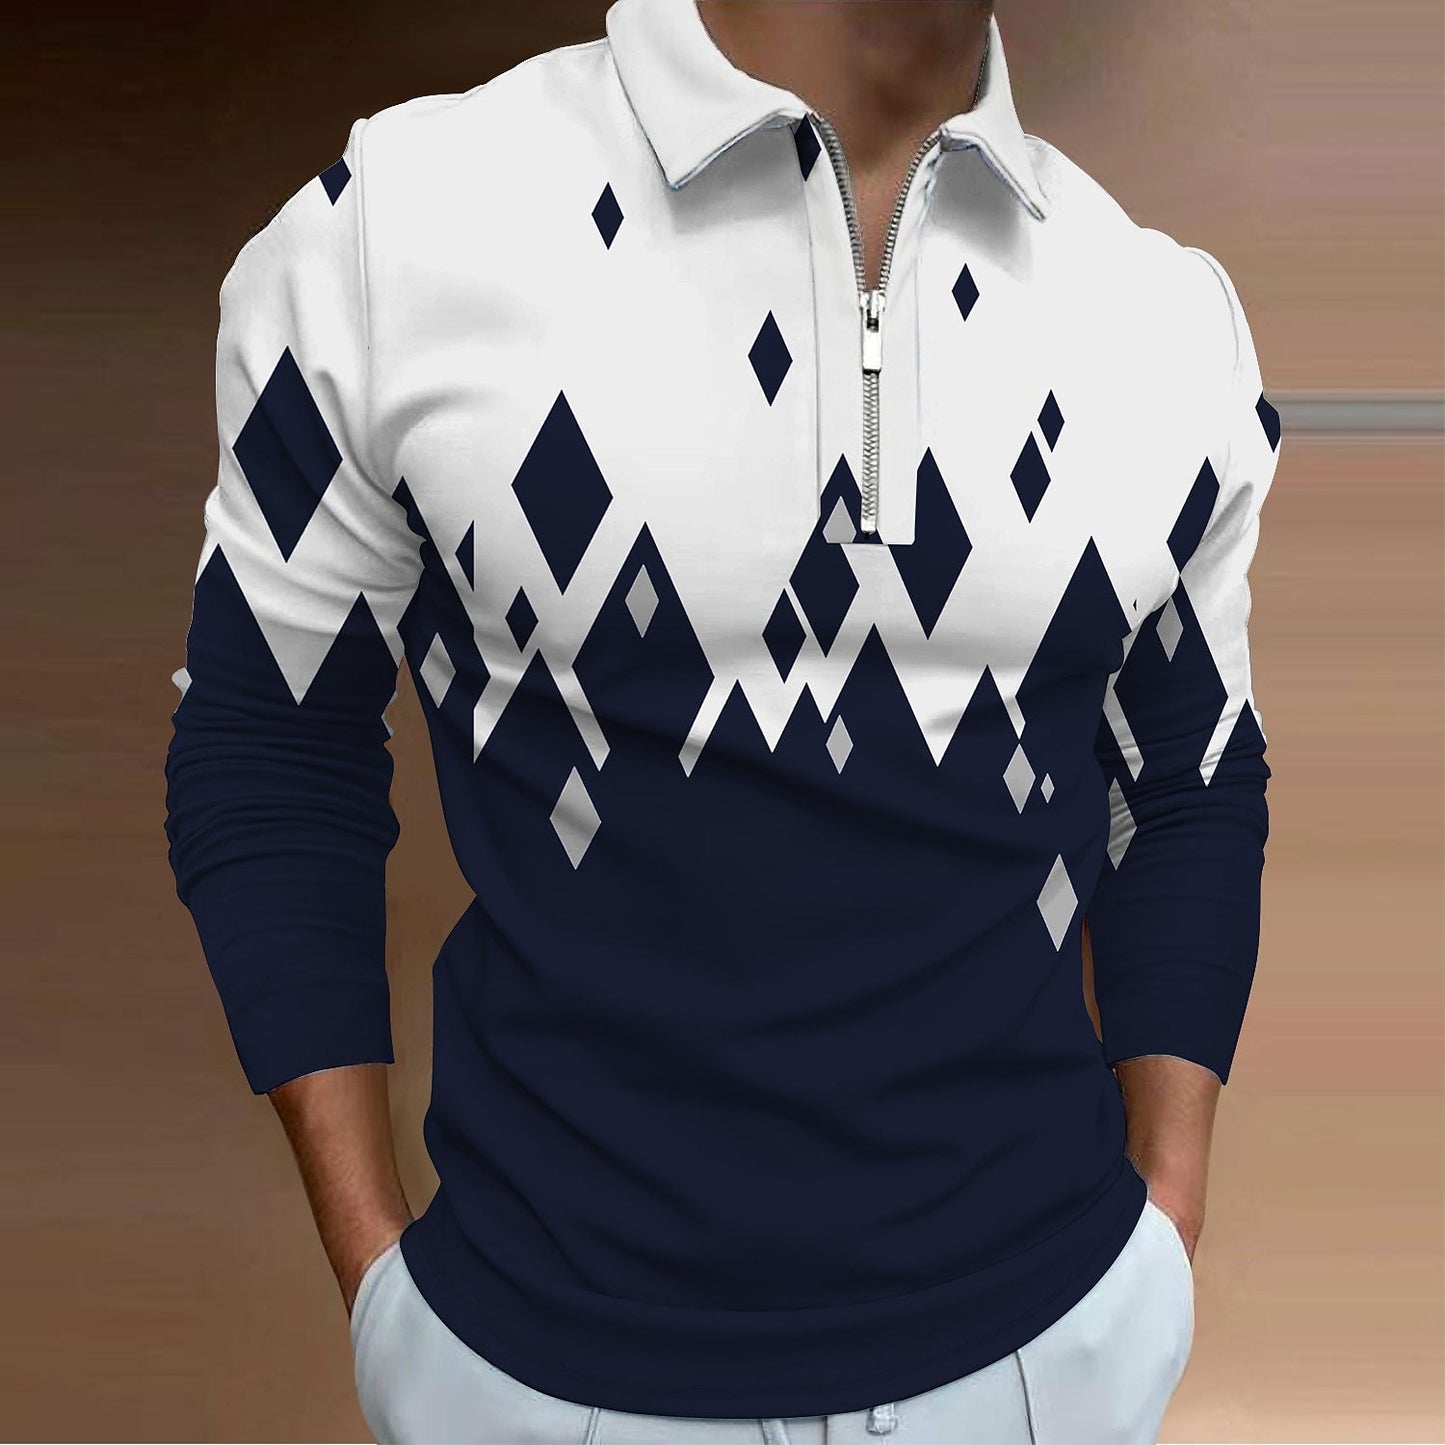 Men's zipper POLO shirt abstract graphic printing geometric pattern Long sleeve zipper printing fashion 3D digital printing